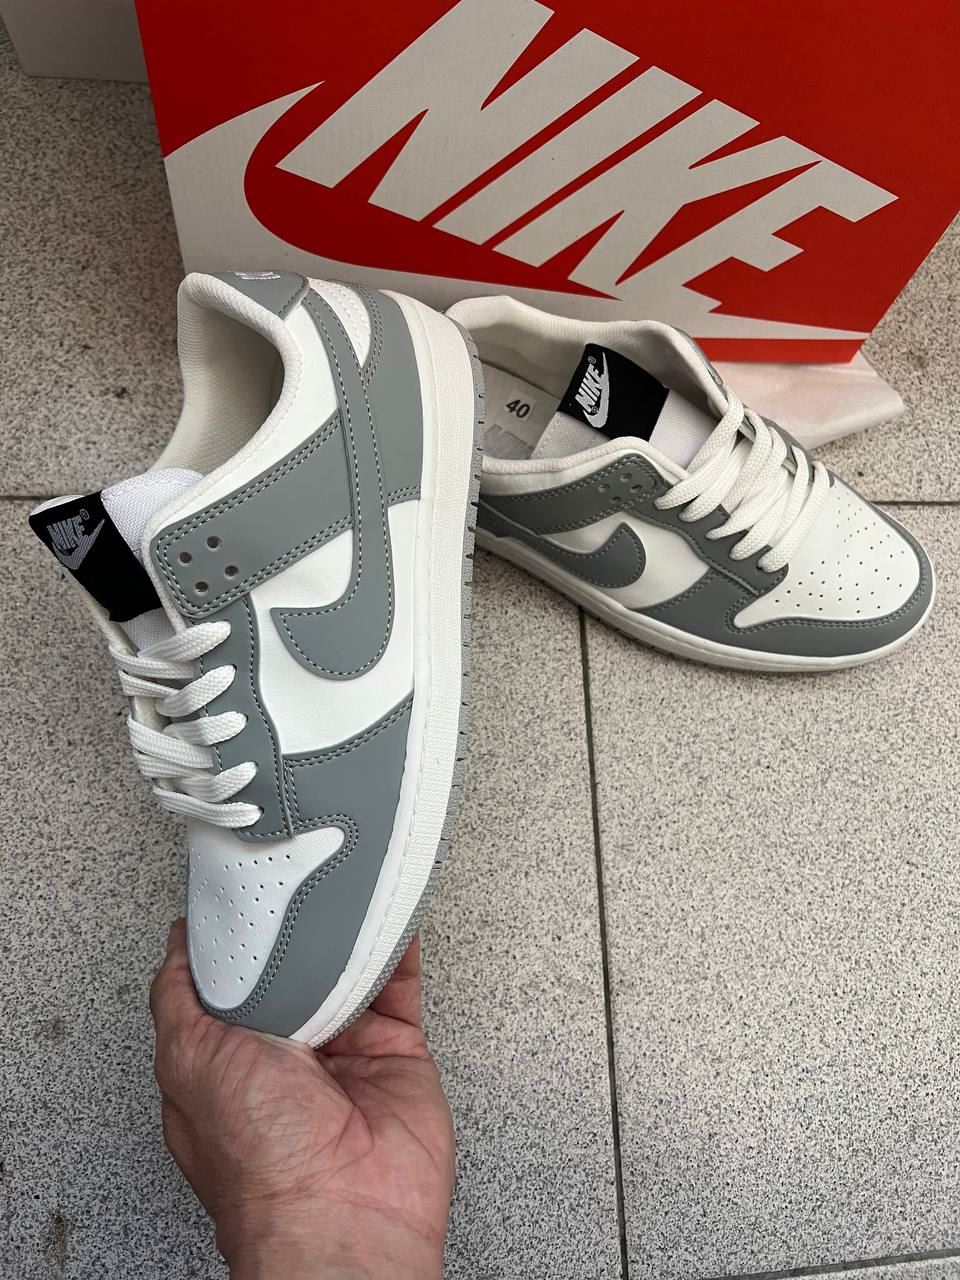 Nike Low gris - Imagen 2